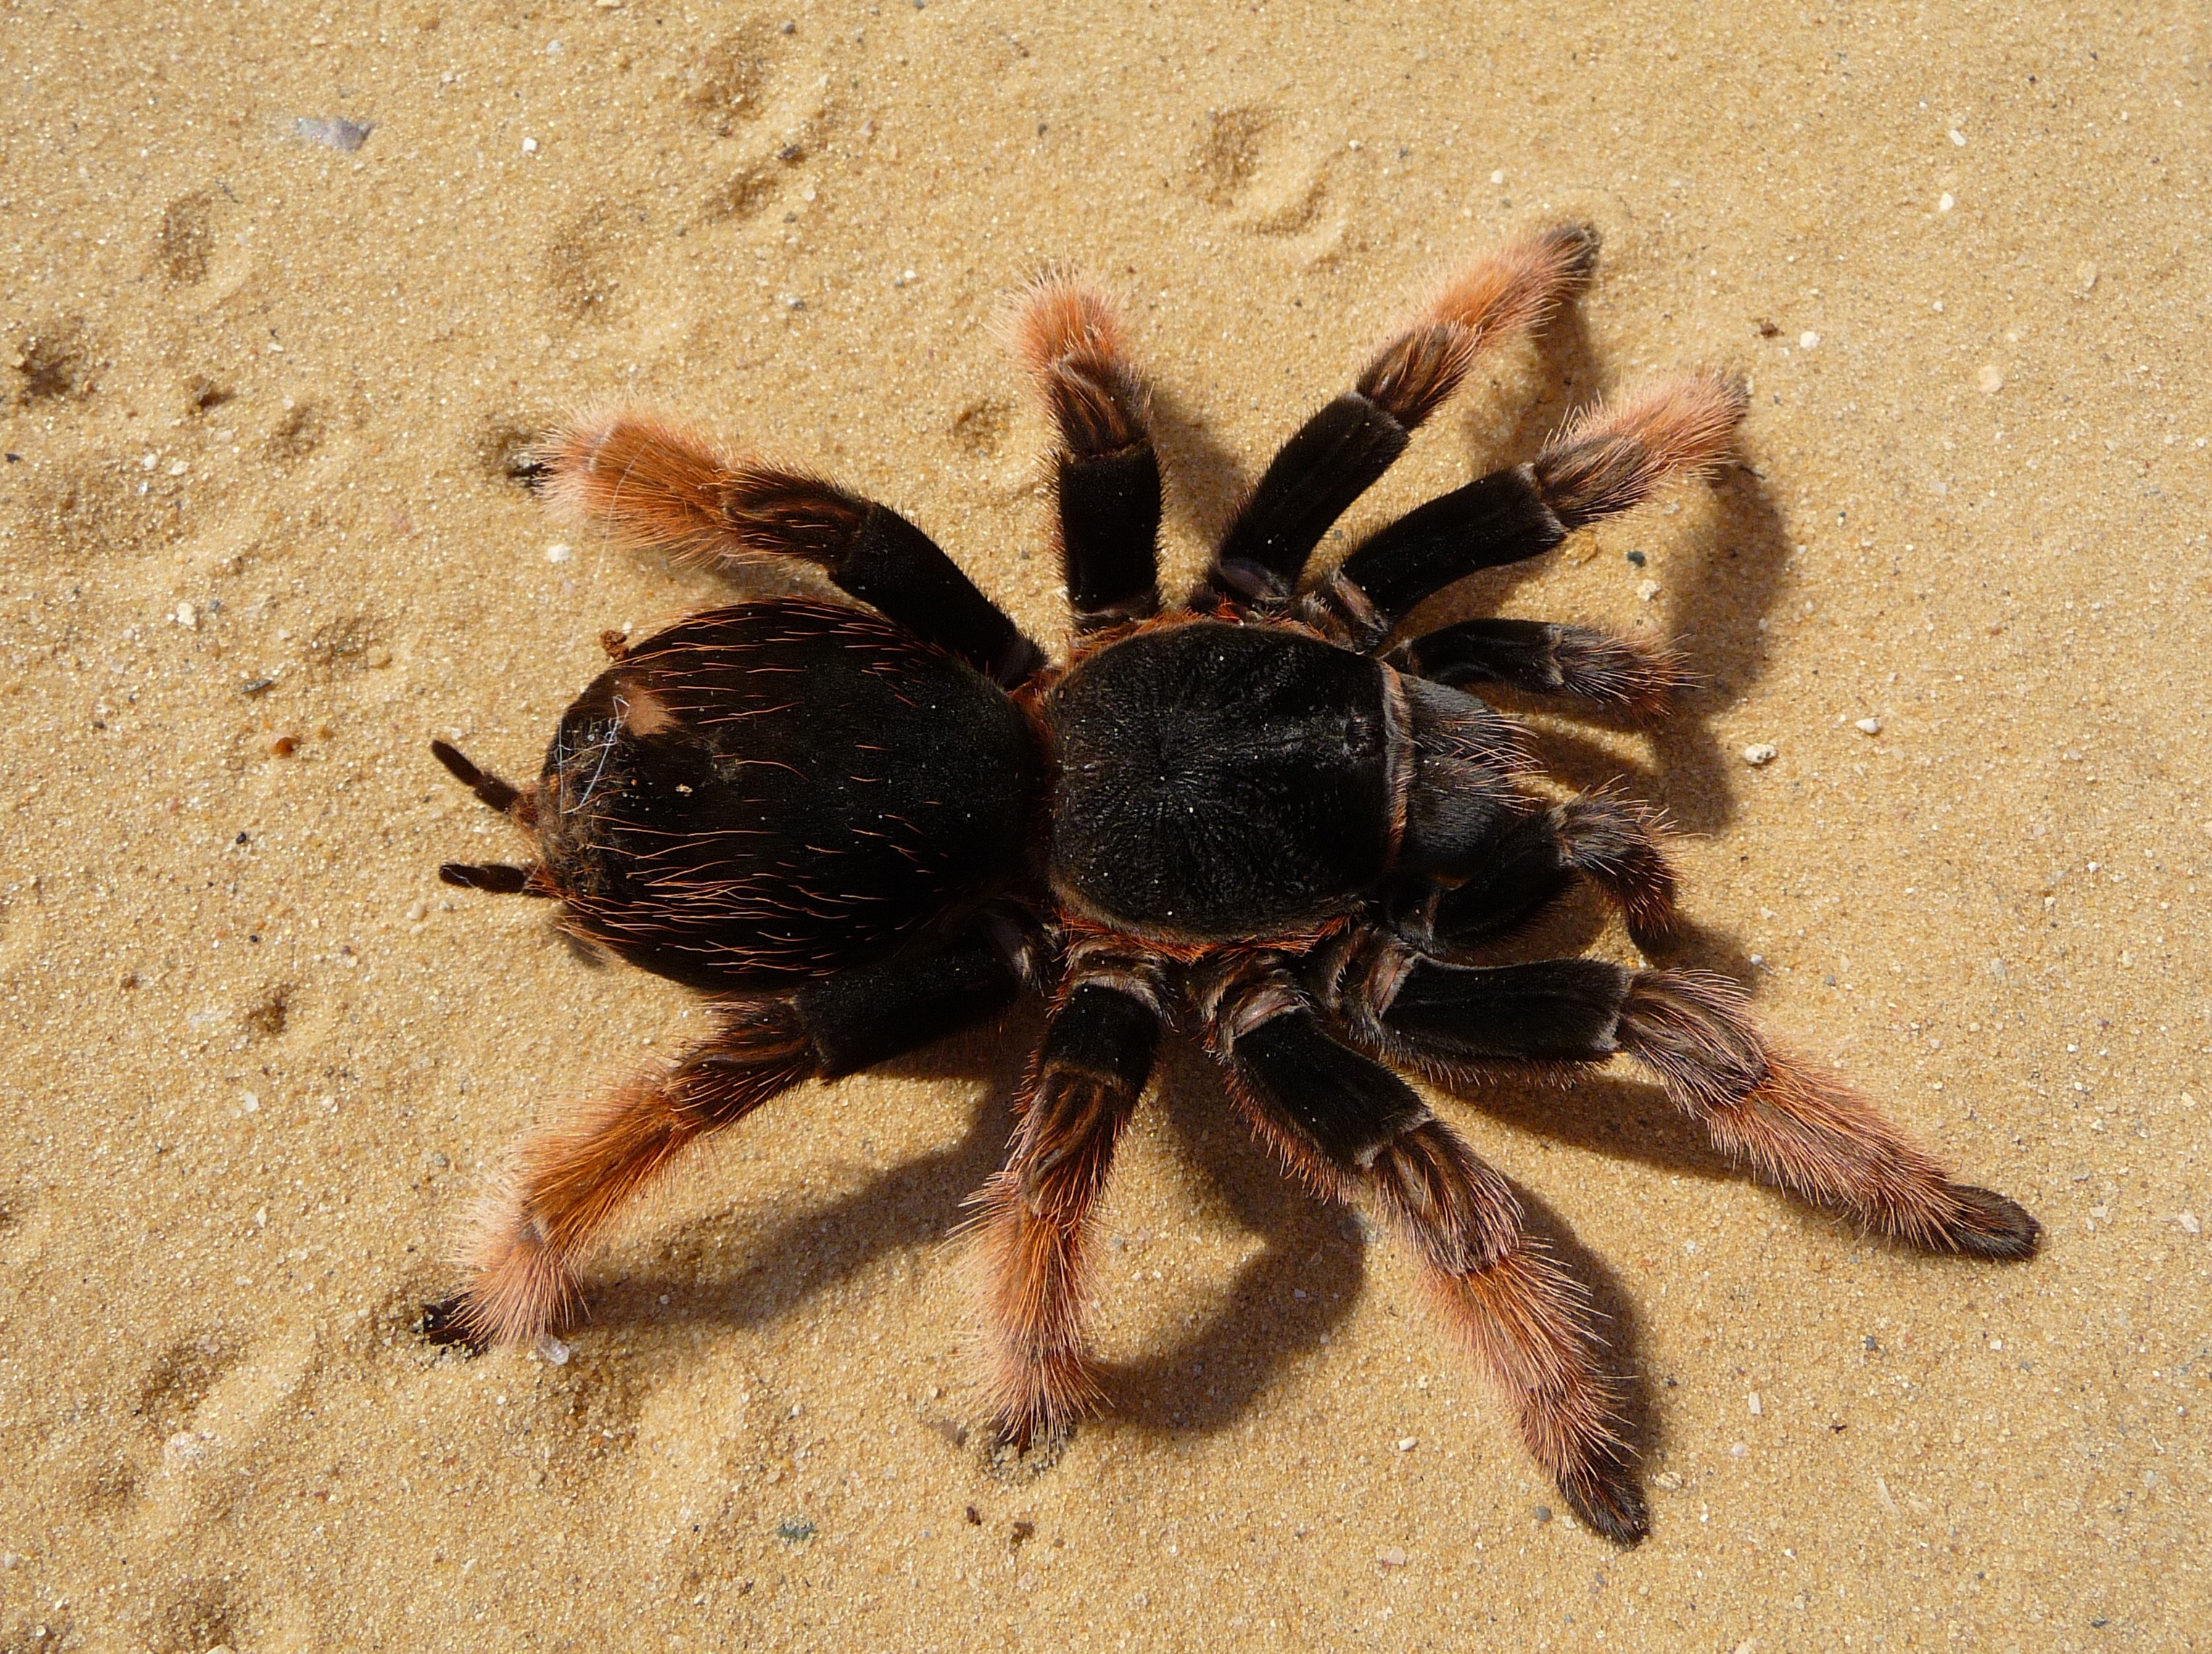 Tarantula in the sand